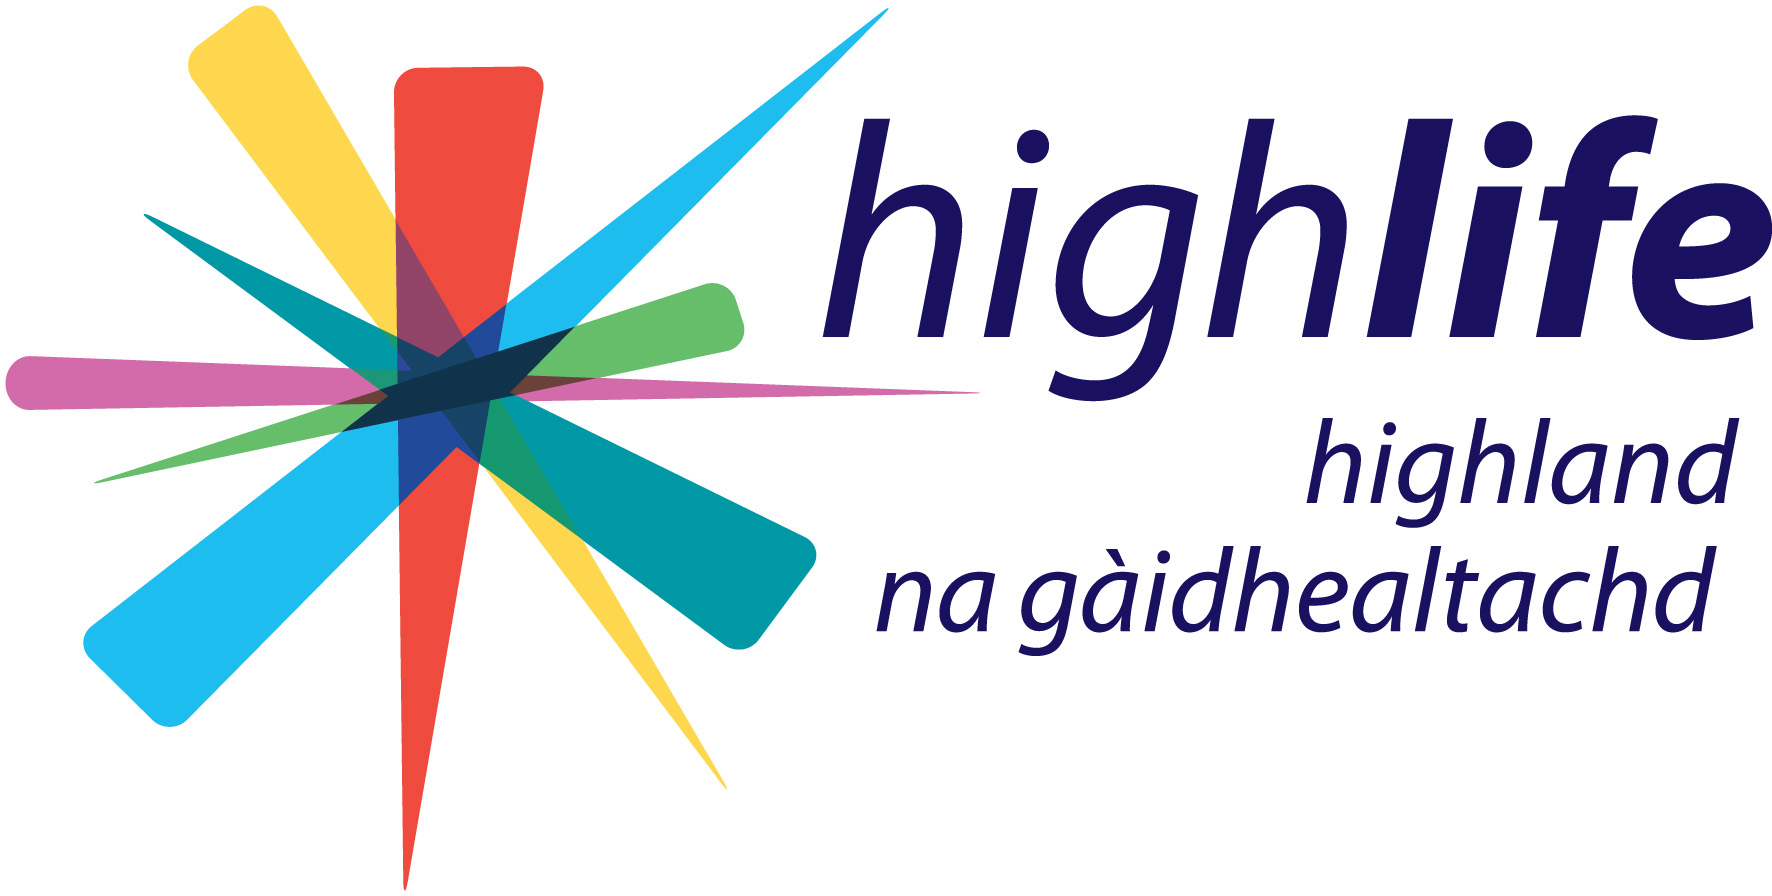 High Life Highland logo